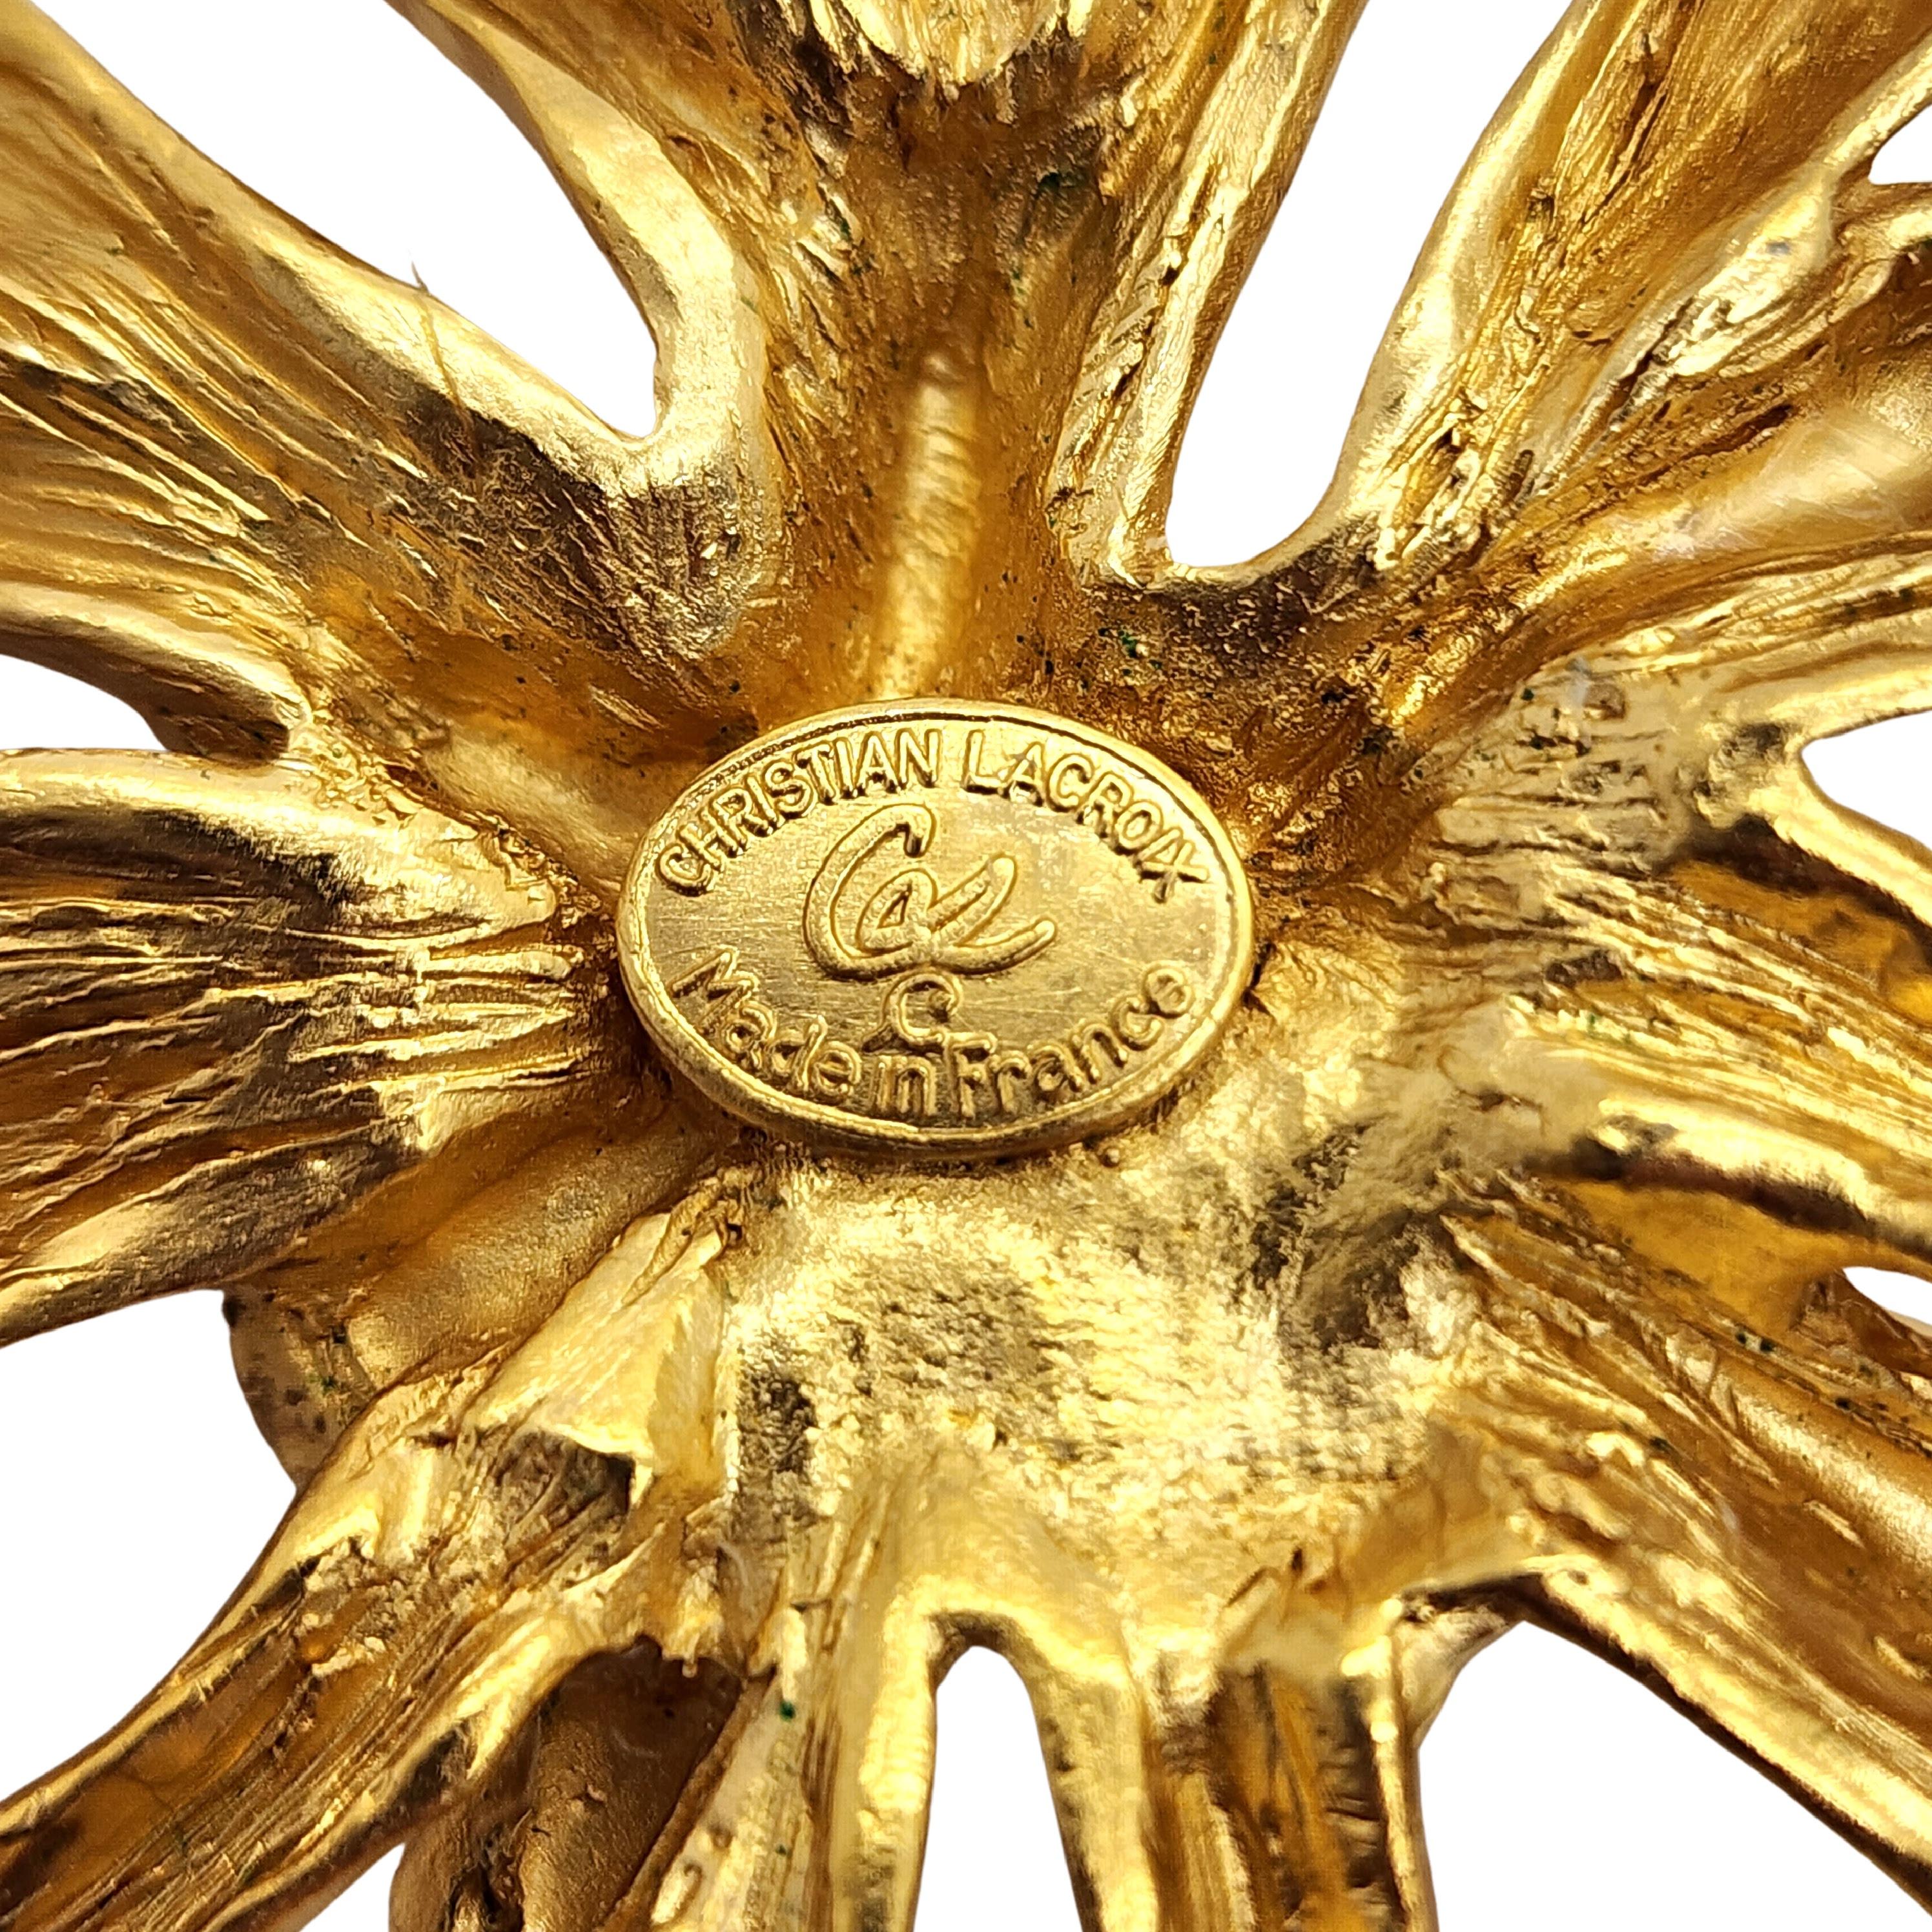 Christian LaCroix France Gold Tone Splash Spatter Pin Brooch #14848 For Sale 4